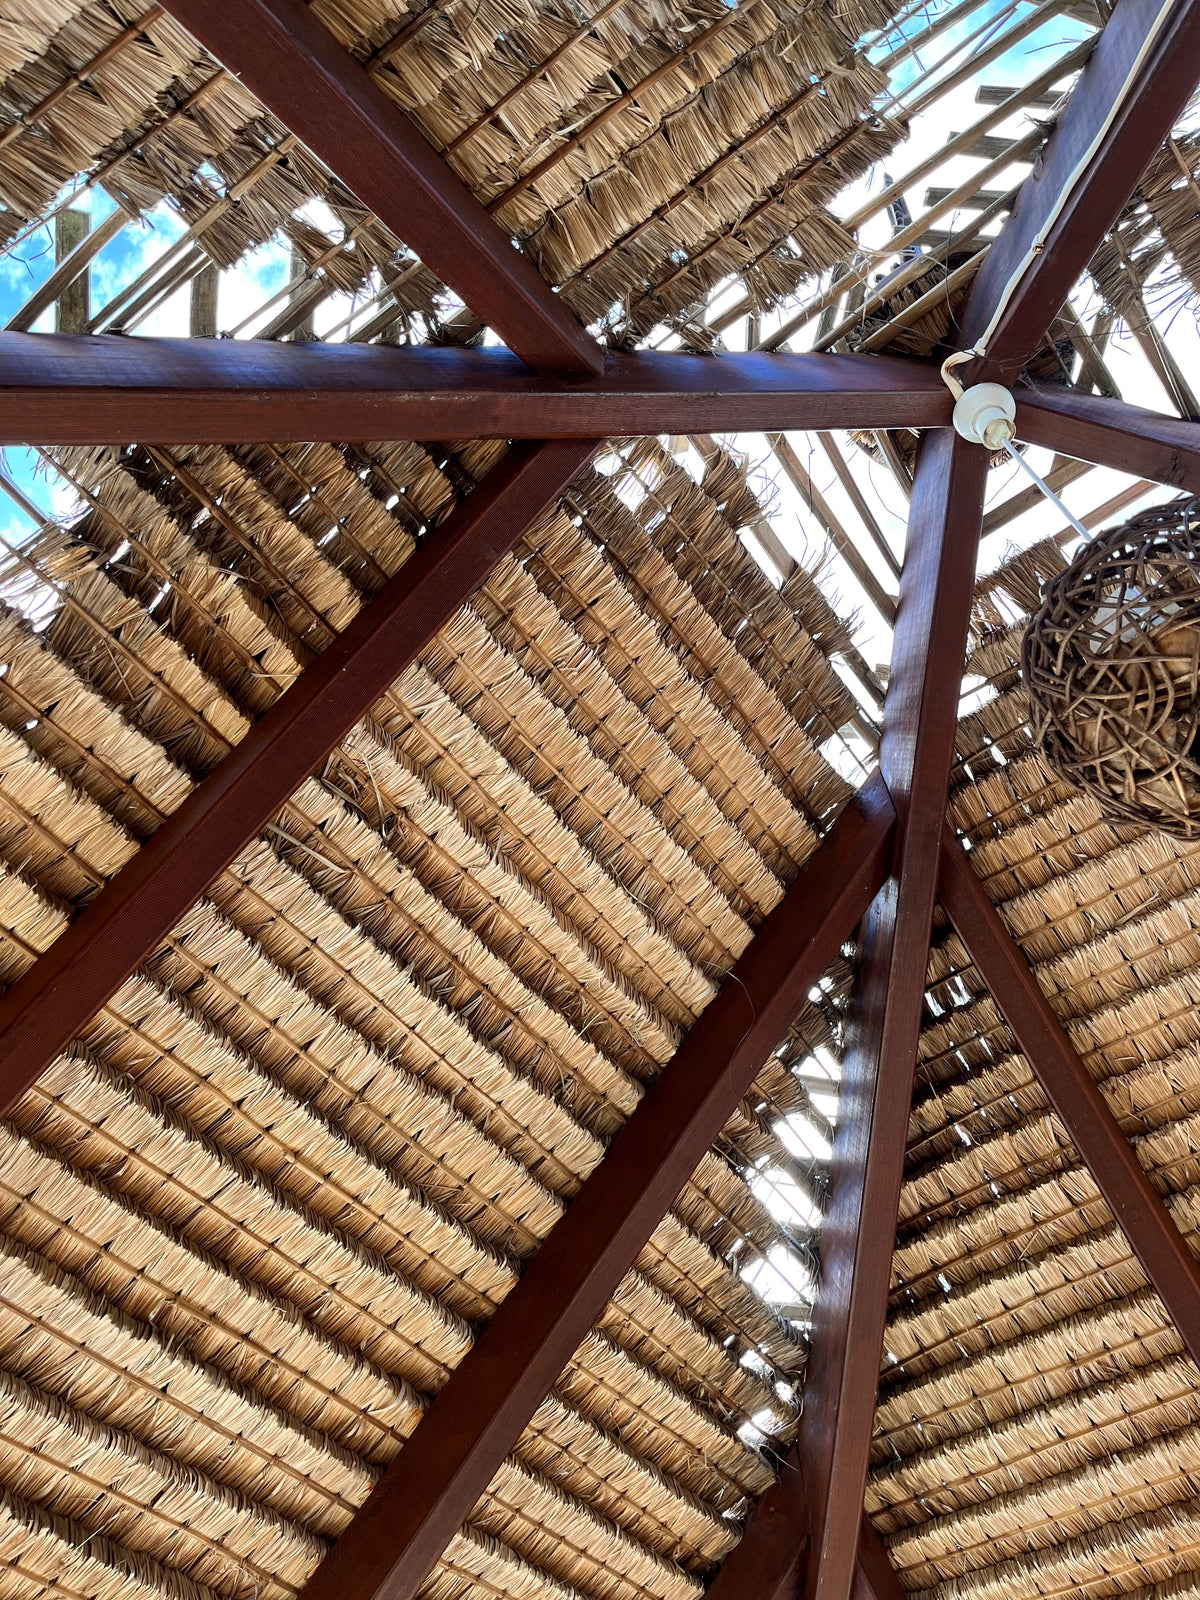 Reroofing your worn Bali hut roof